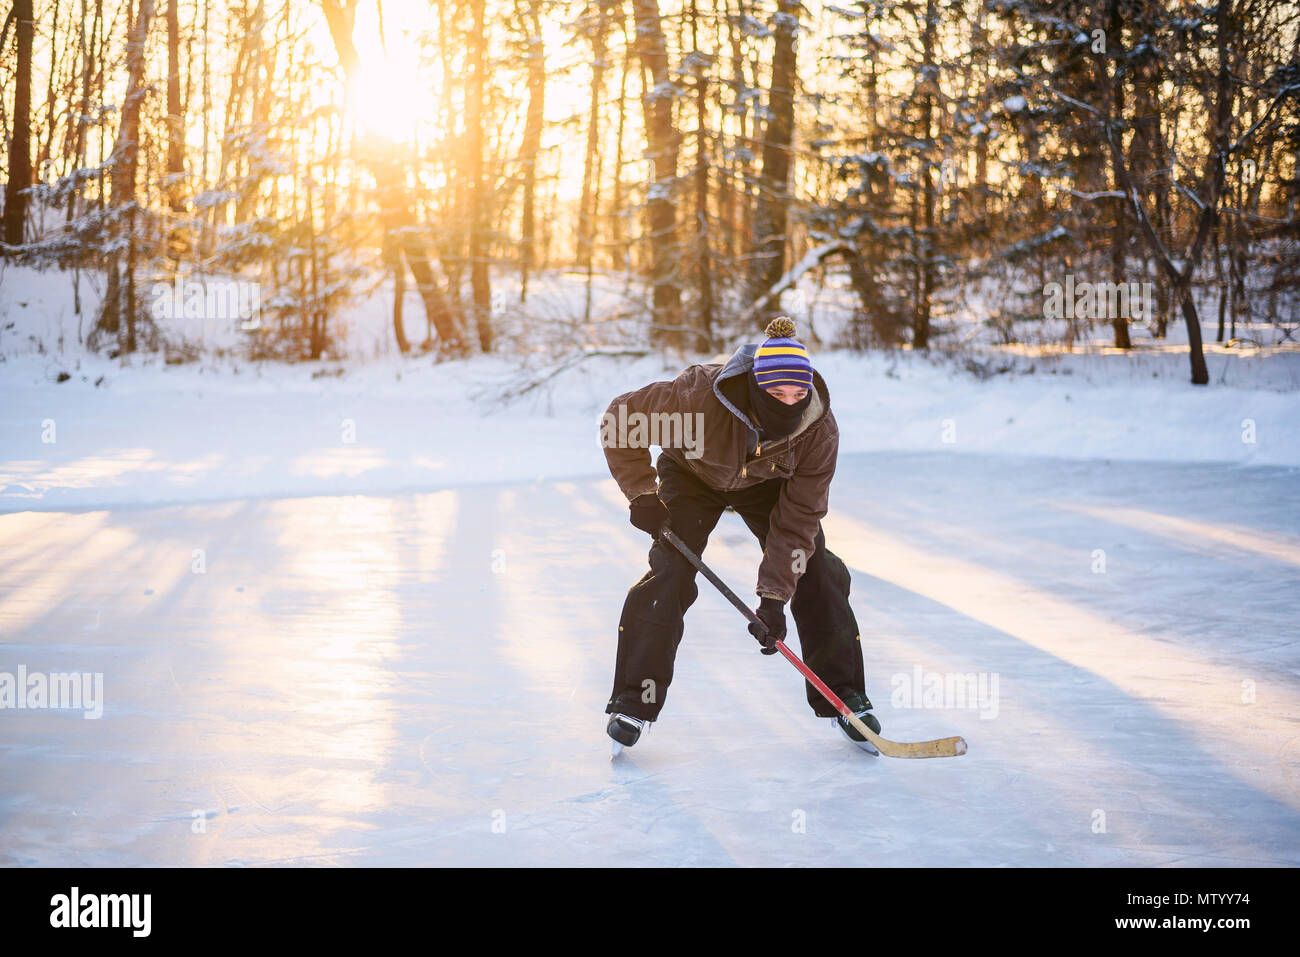 Man playing ice hockey on a frozen lake Stock Photo